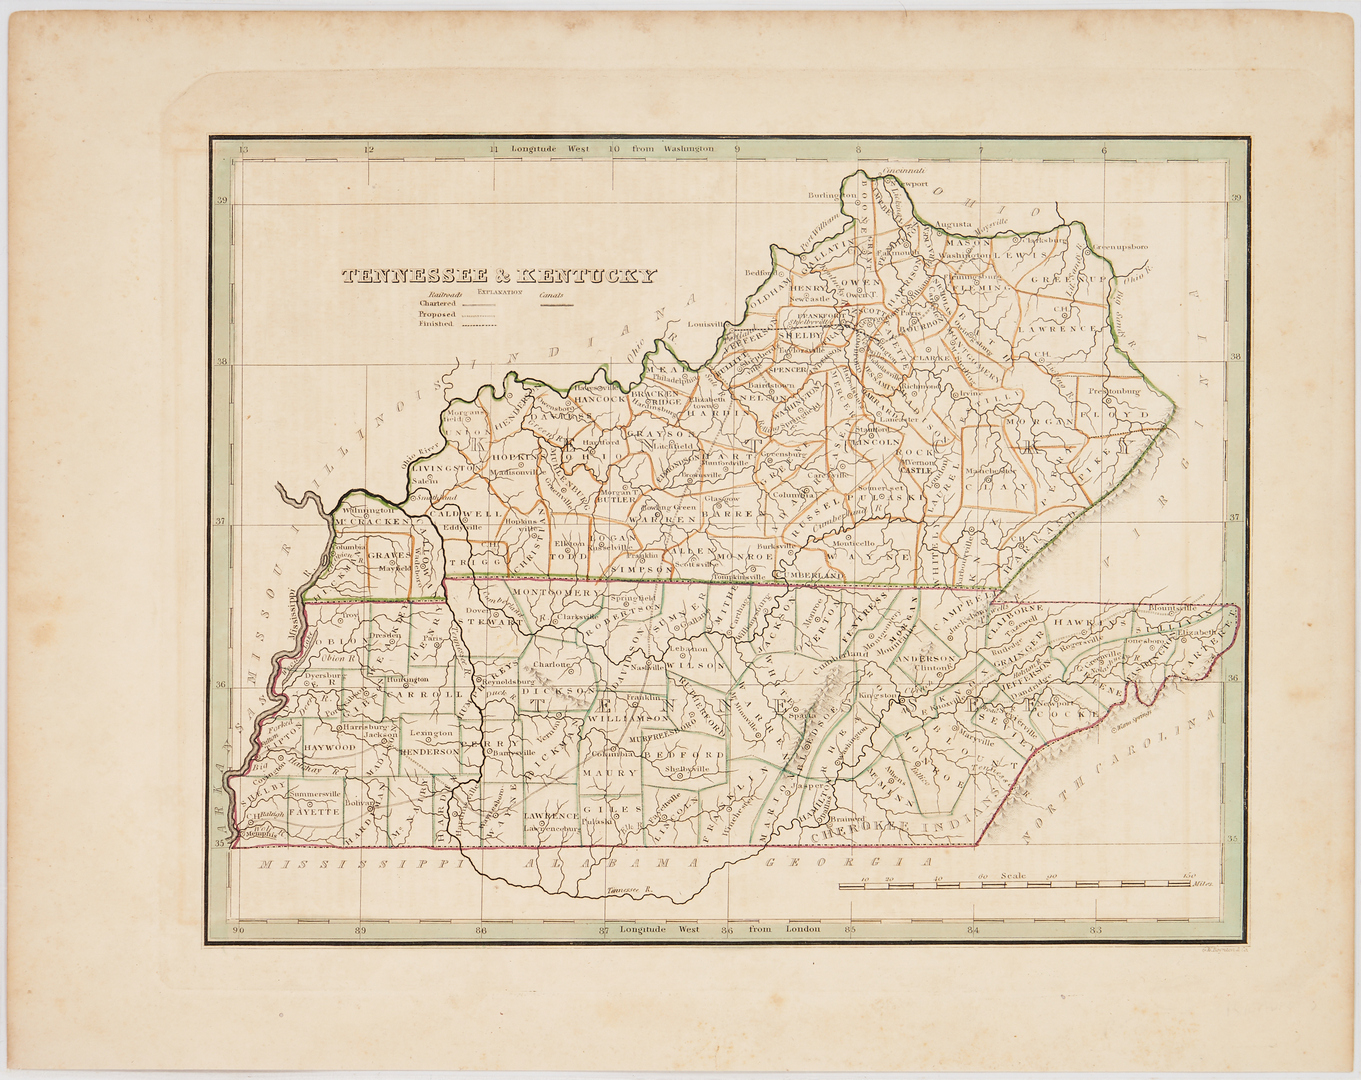 Lot 711: 4 KY and TN Maps plus KY Civil War Print, 5 items